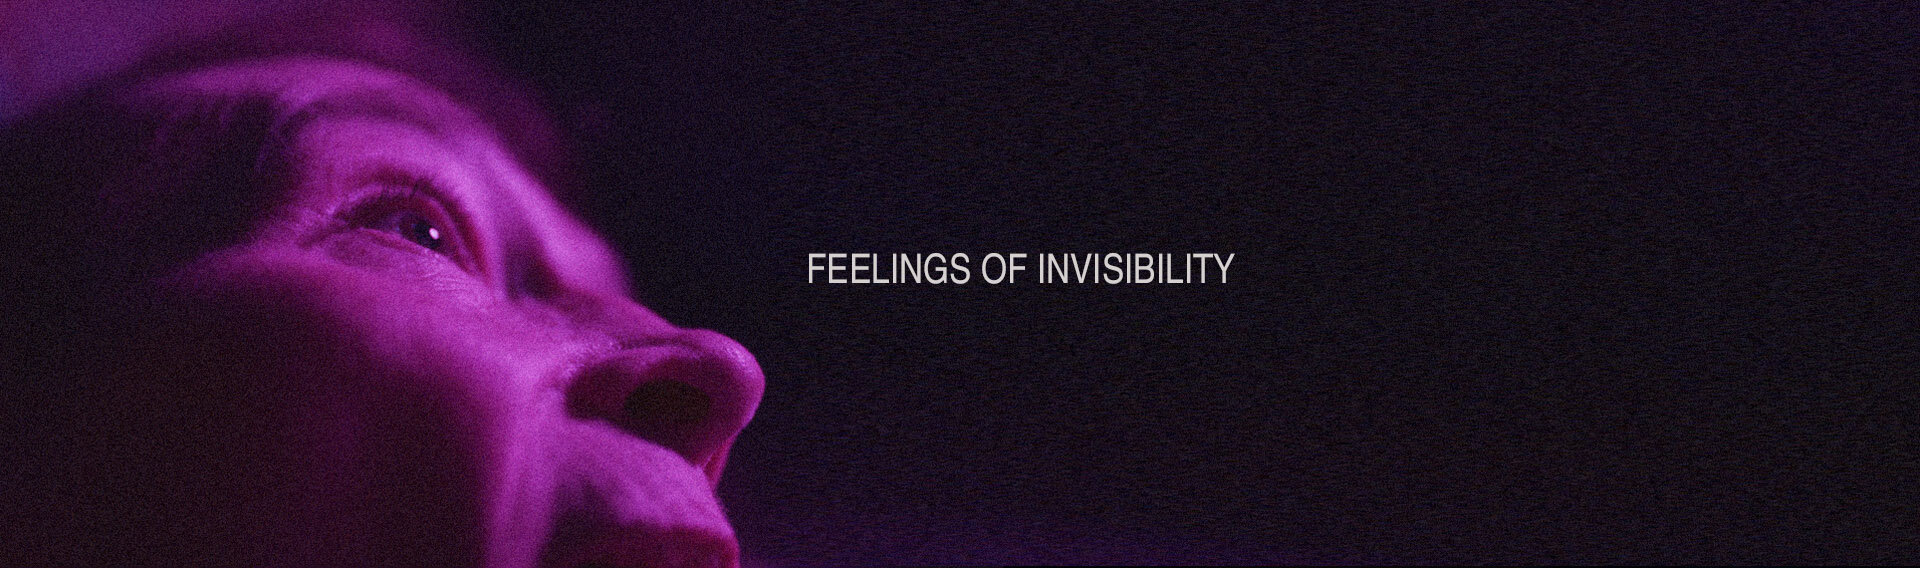 Feelings of Invisibility.jpg